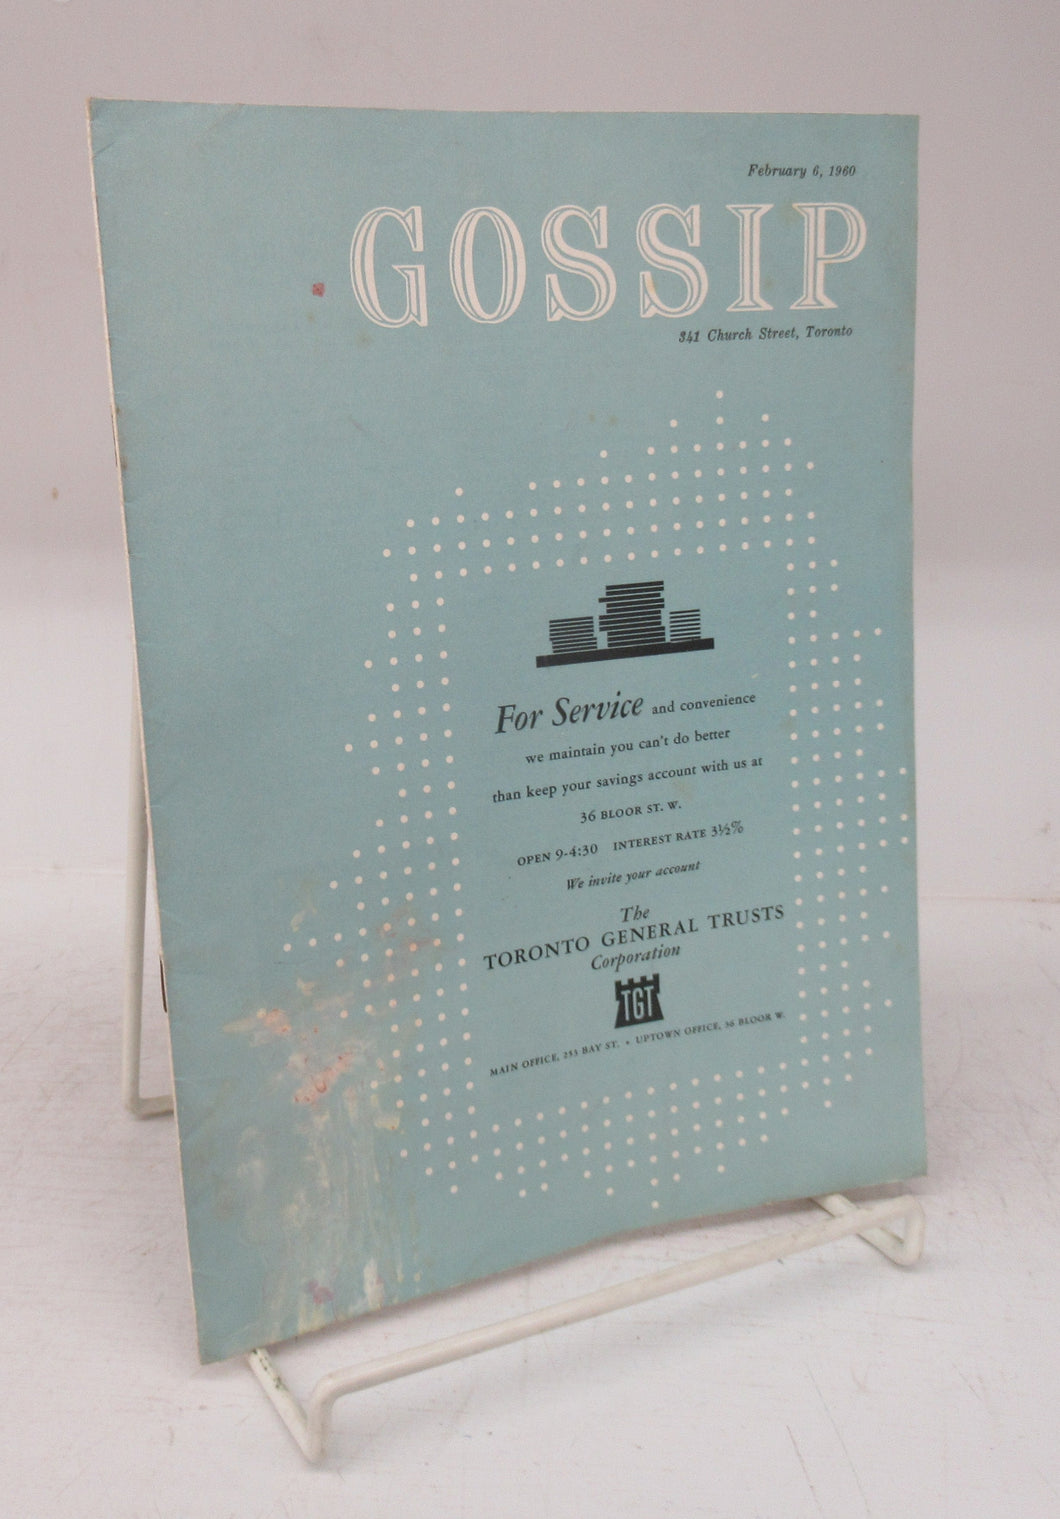 Gossip! February 6, 1960